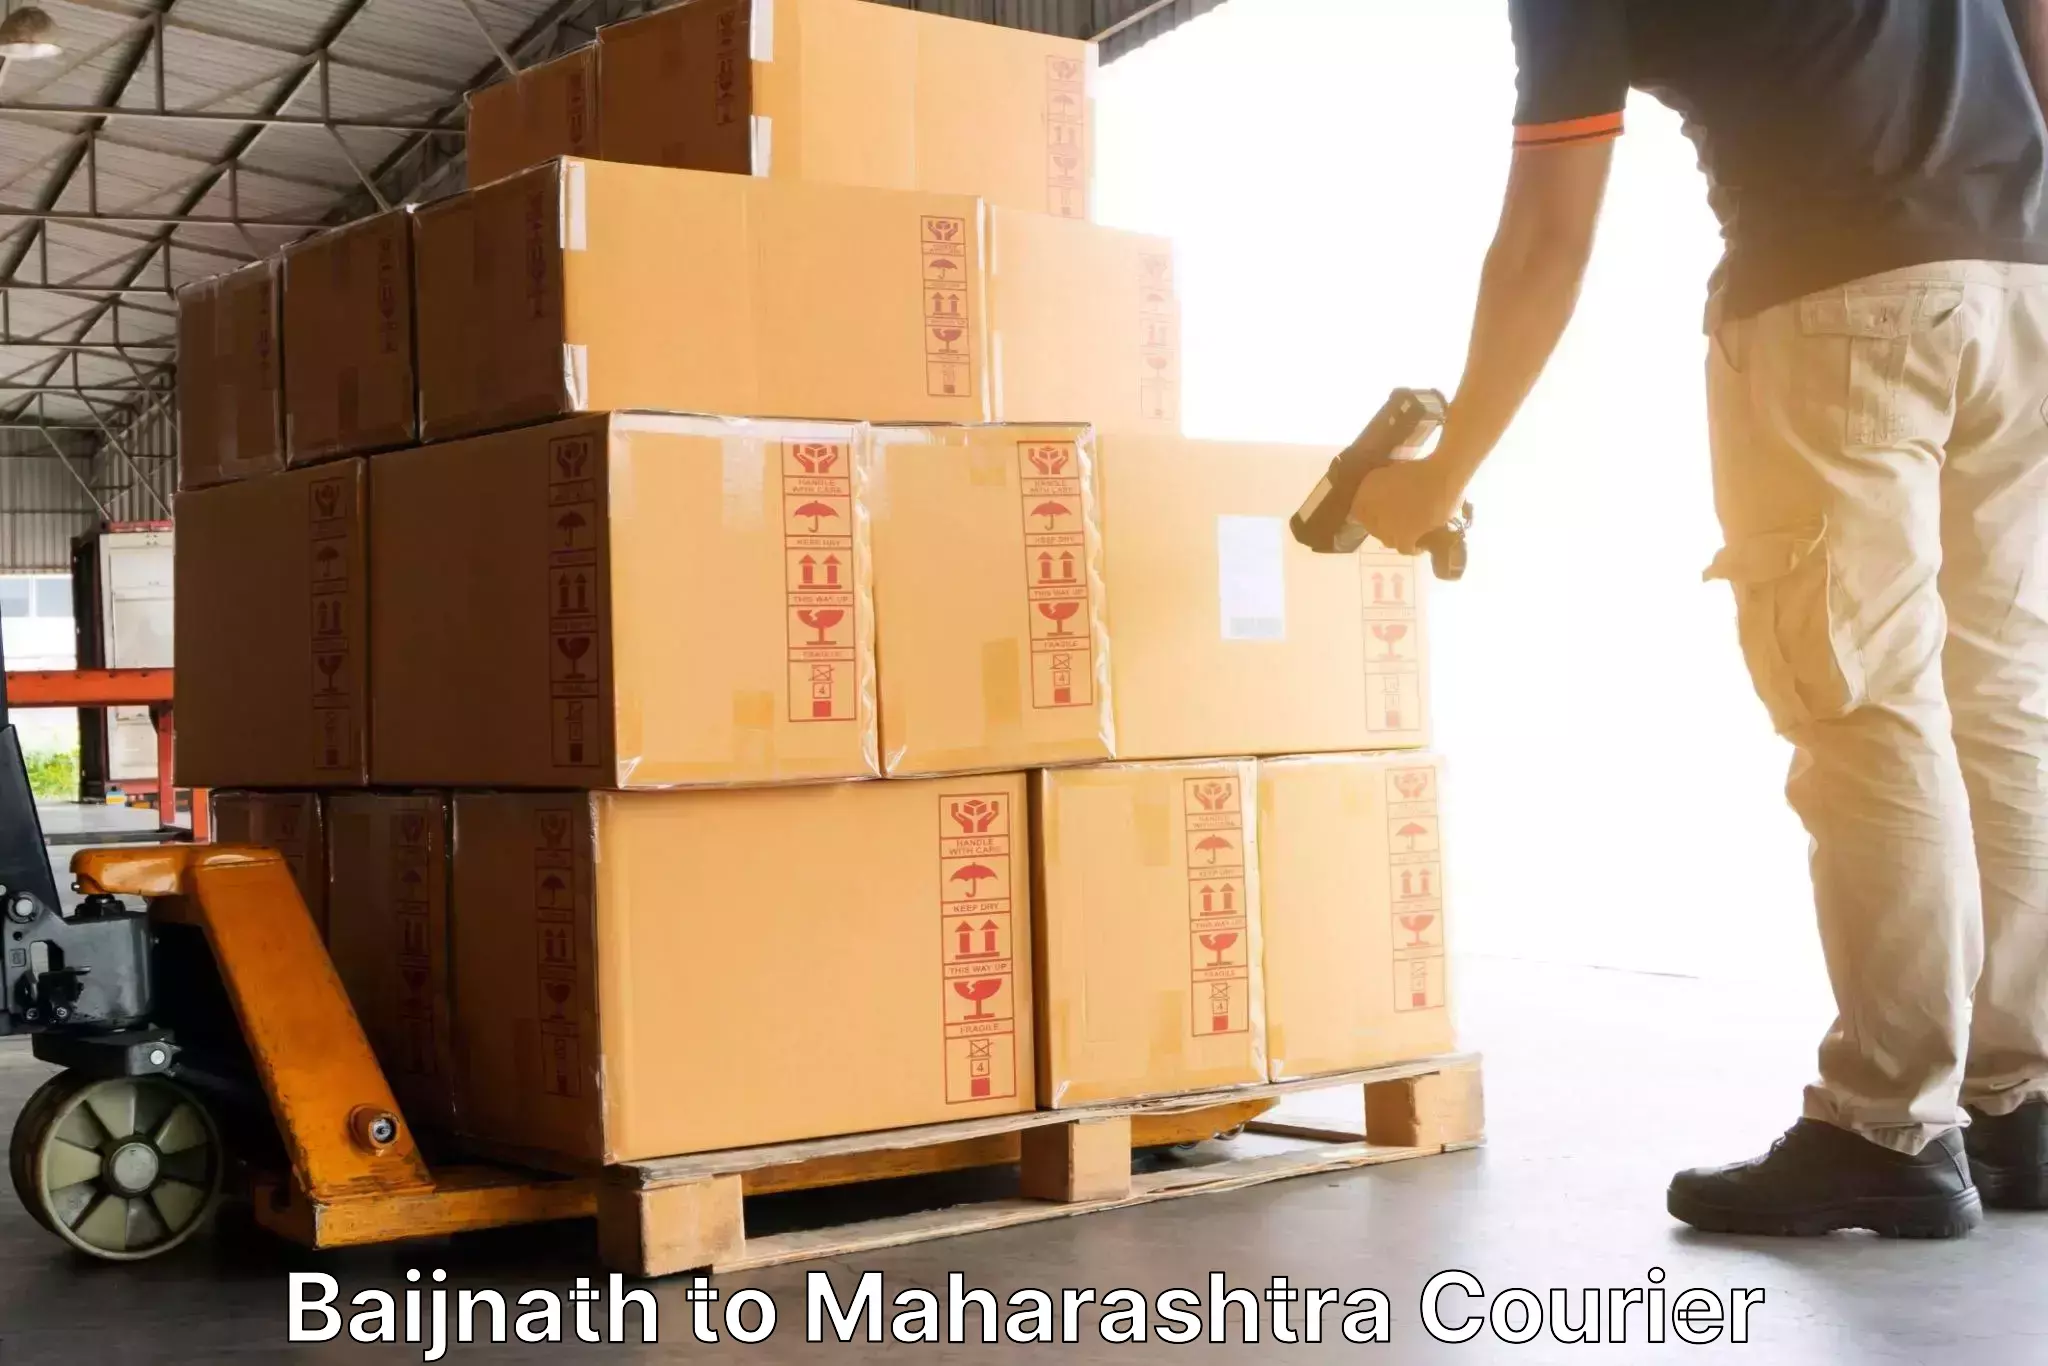 Reliable courier service Baijnath to Sindhudurg